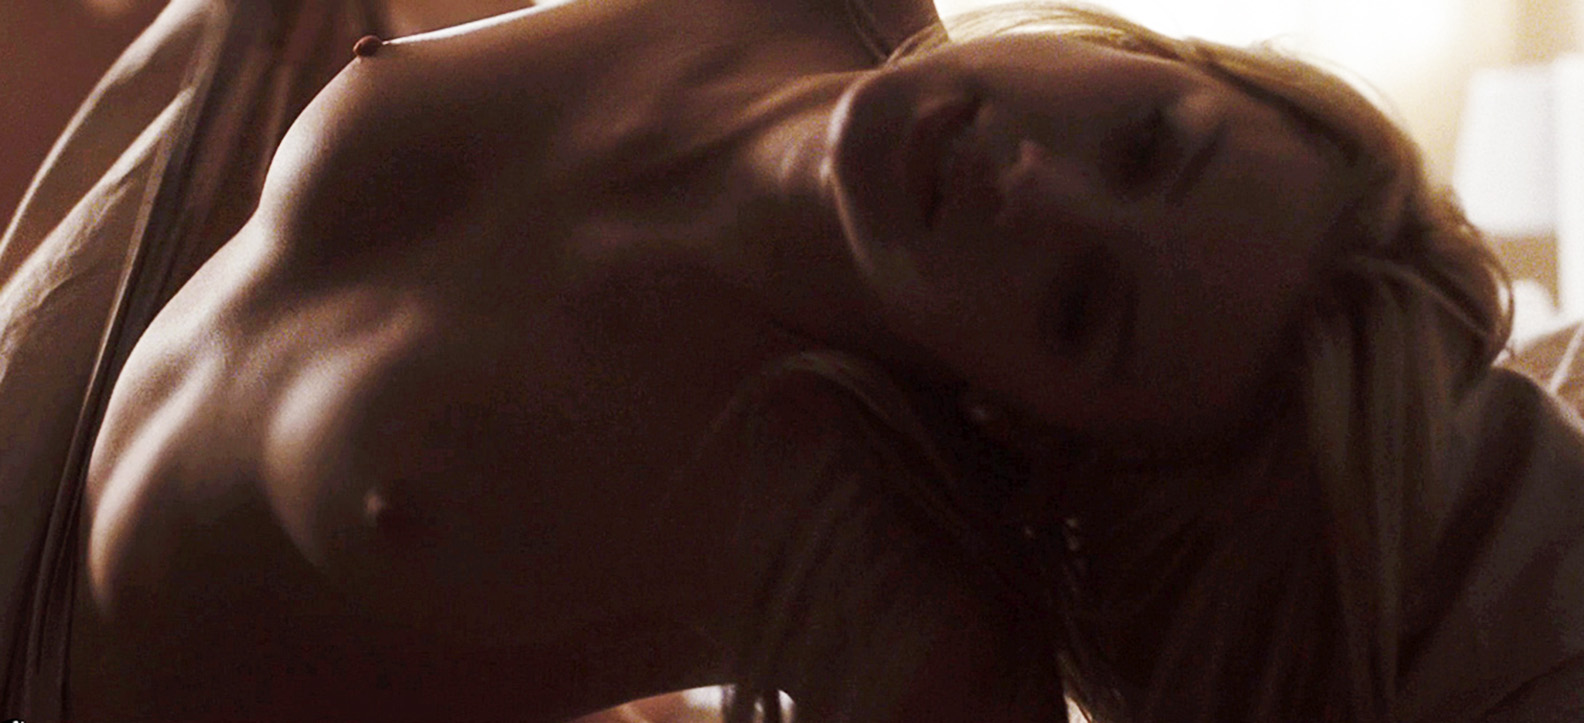 Amber Heard Is Back With Smokin Hot Titties